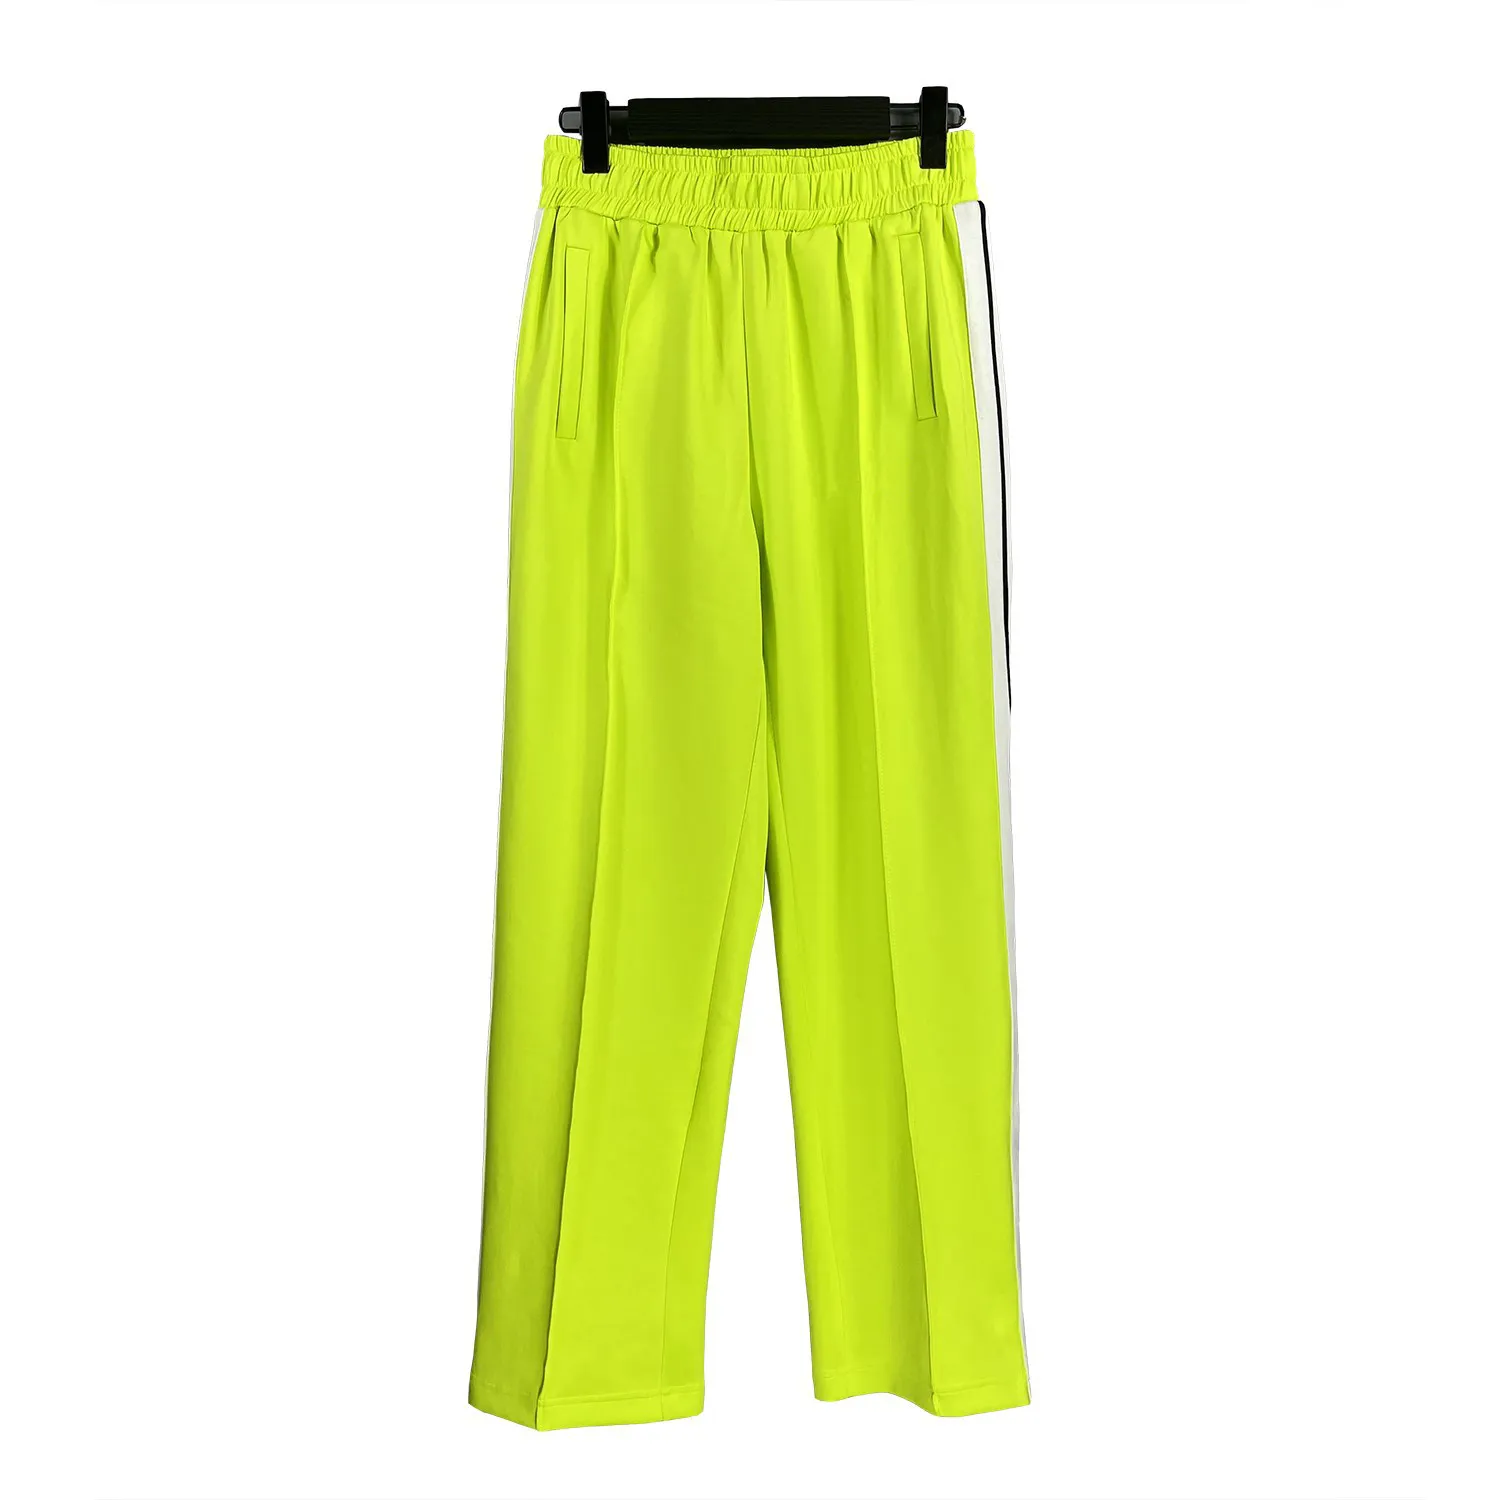 Side Striped Sport Pants for Men Women Casual Jogger Pants Streetwear Cargo Pant Fitness Workout Trousers